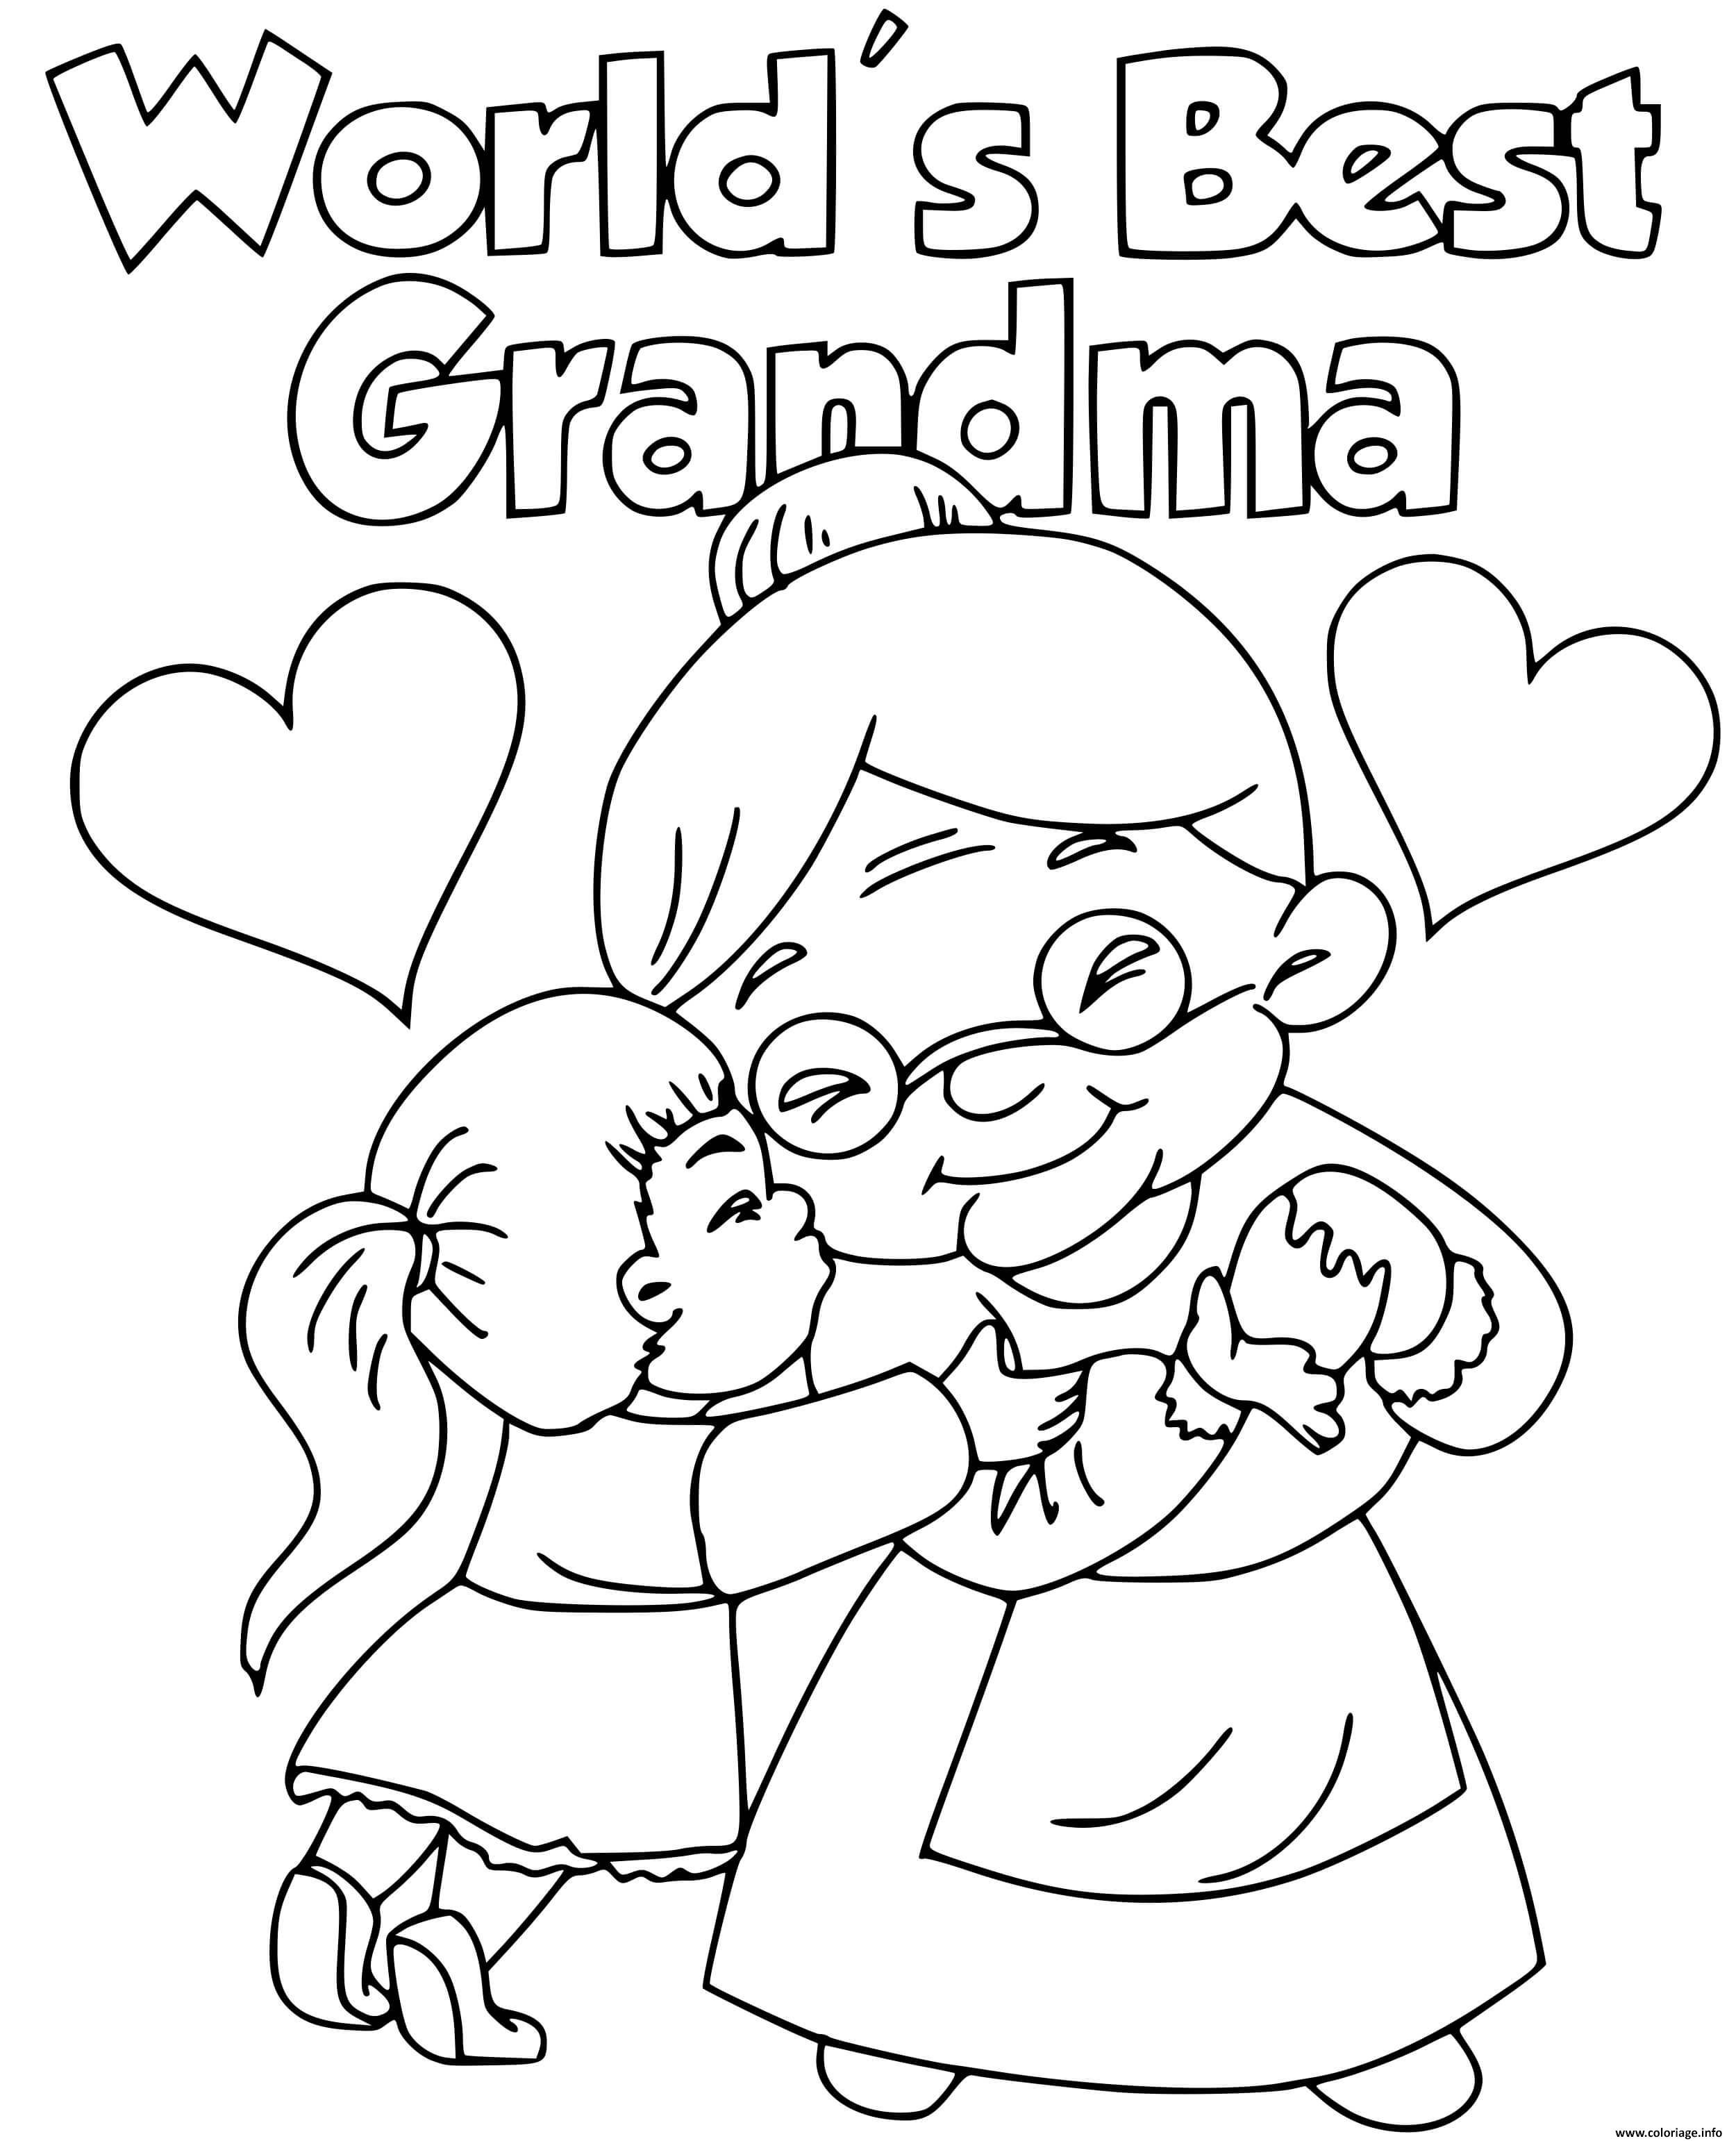 Рисунок бабушке на день рождения легко. Рисунок бабушке на день рождения. Открытка для бабушки раскраска. Рисунок бабушке на день рождения от внука. Раскраска с днем рождения бабушка.